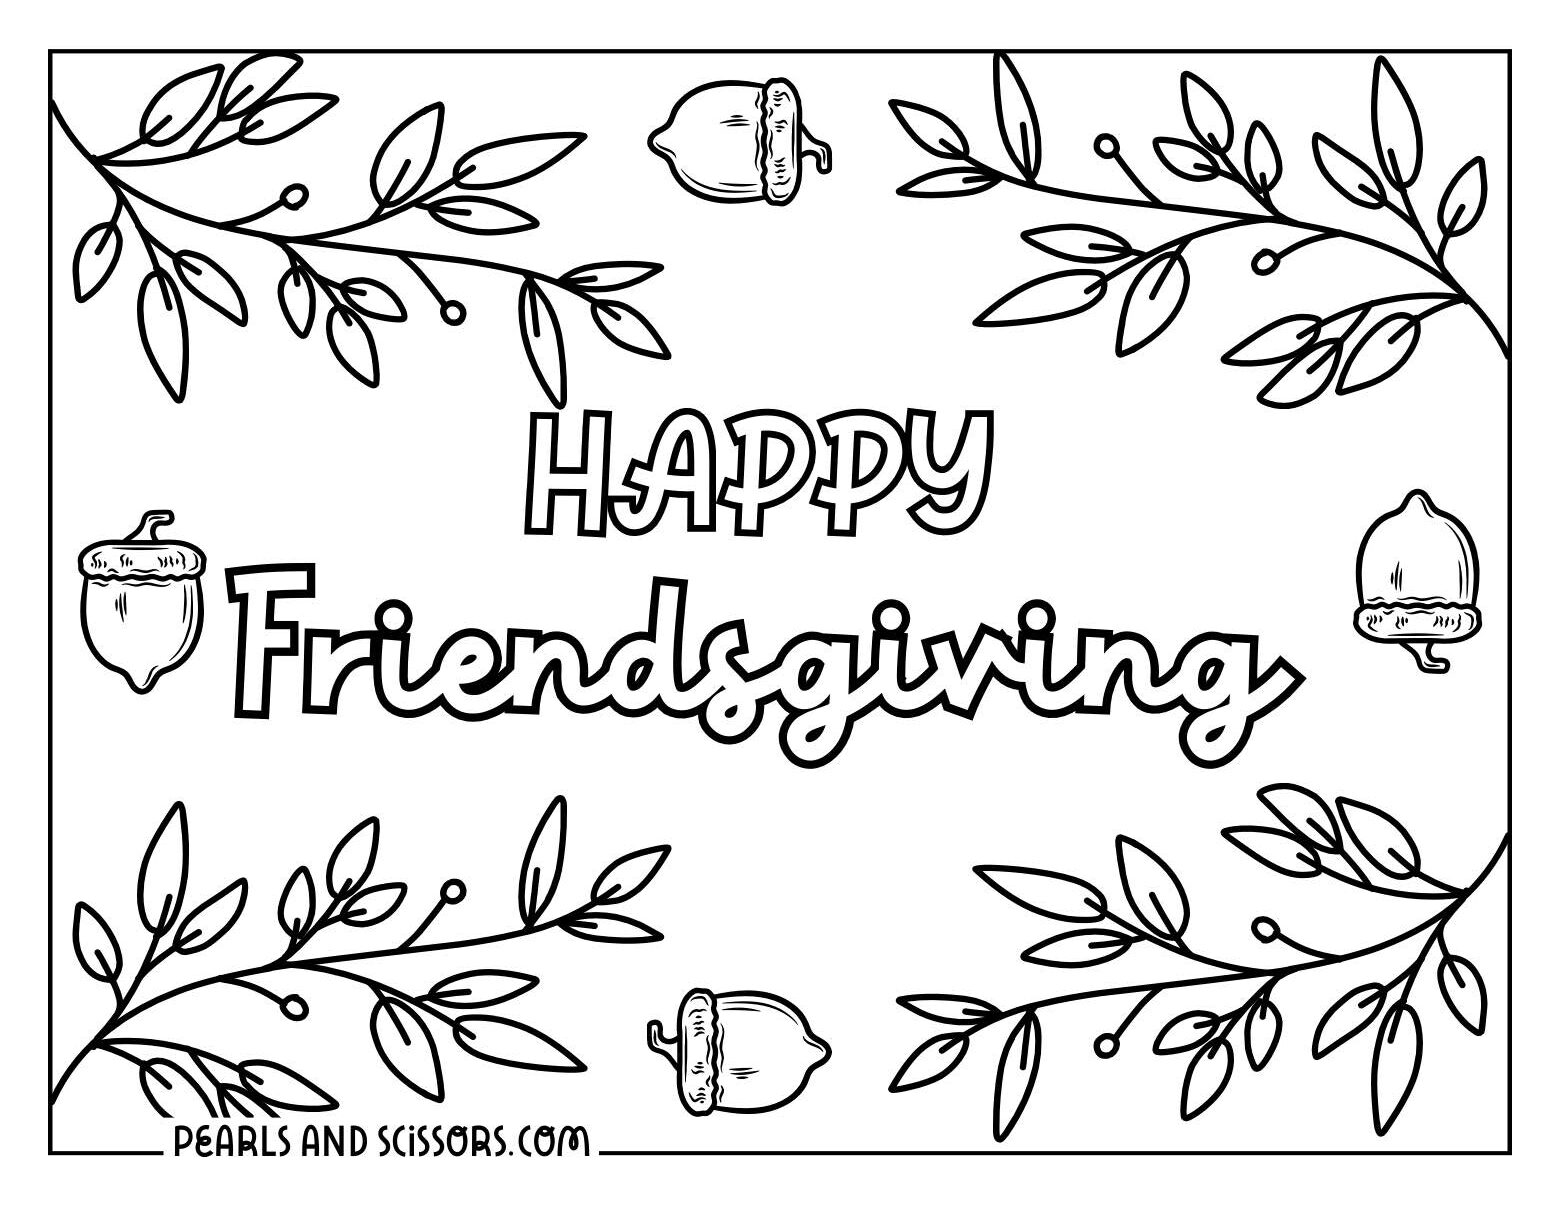 Happy friendsgiving coloring page.